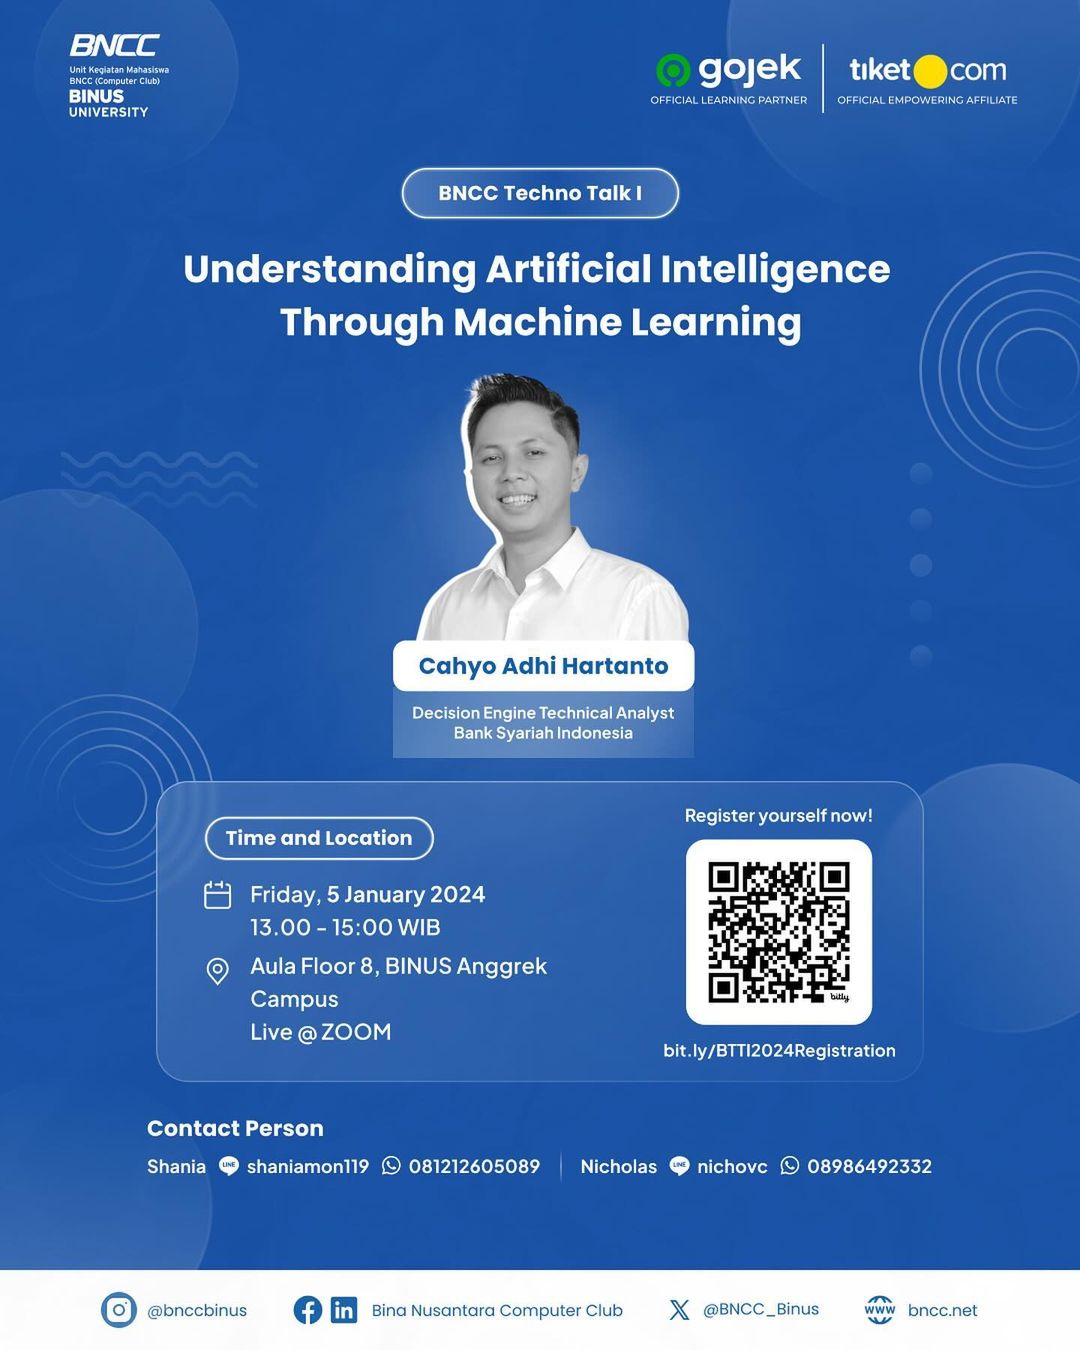 BNCC Techno Talk I: Understanding Artificial Intelligence Through Machine Learning